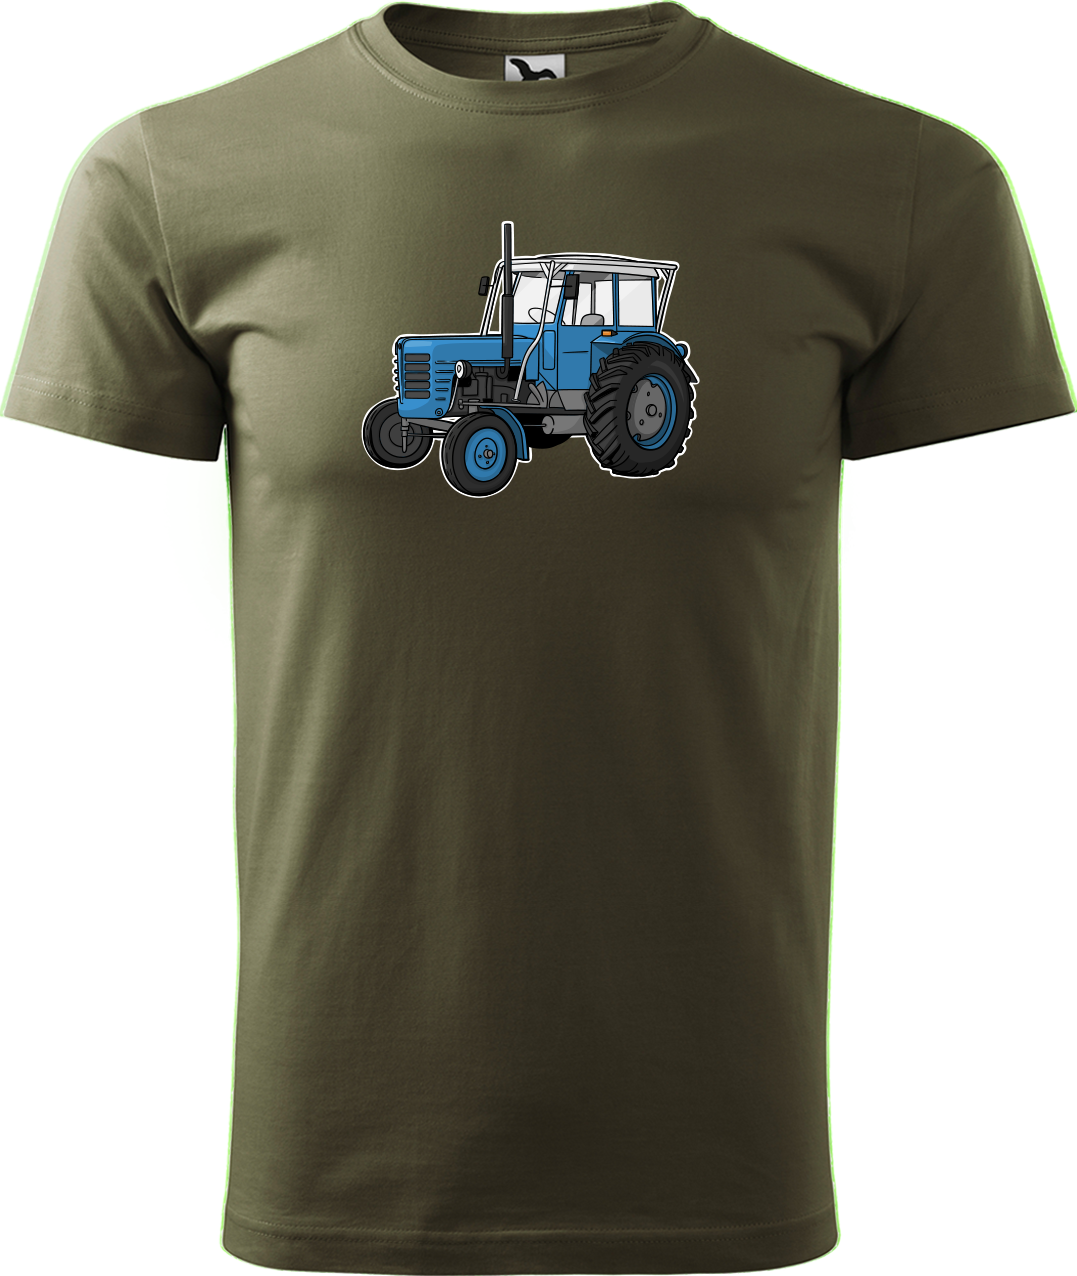 Tričko s traktorem - Starý traktor Velikost: M, Barva: Military (69)